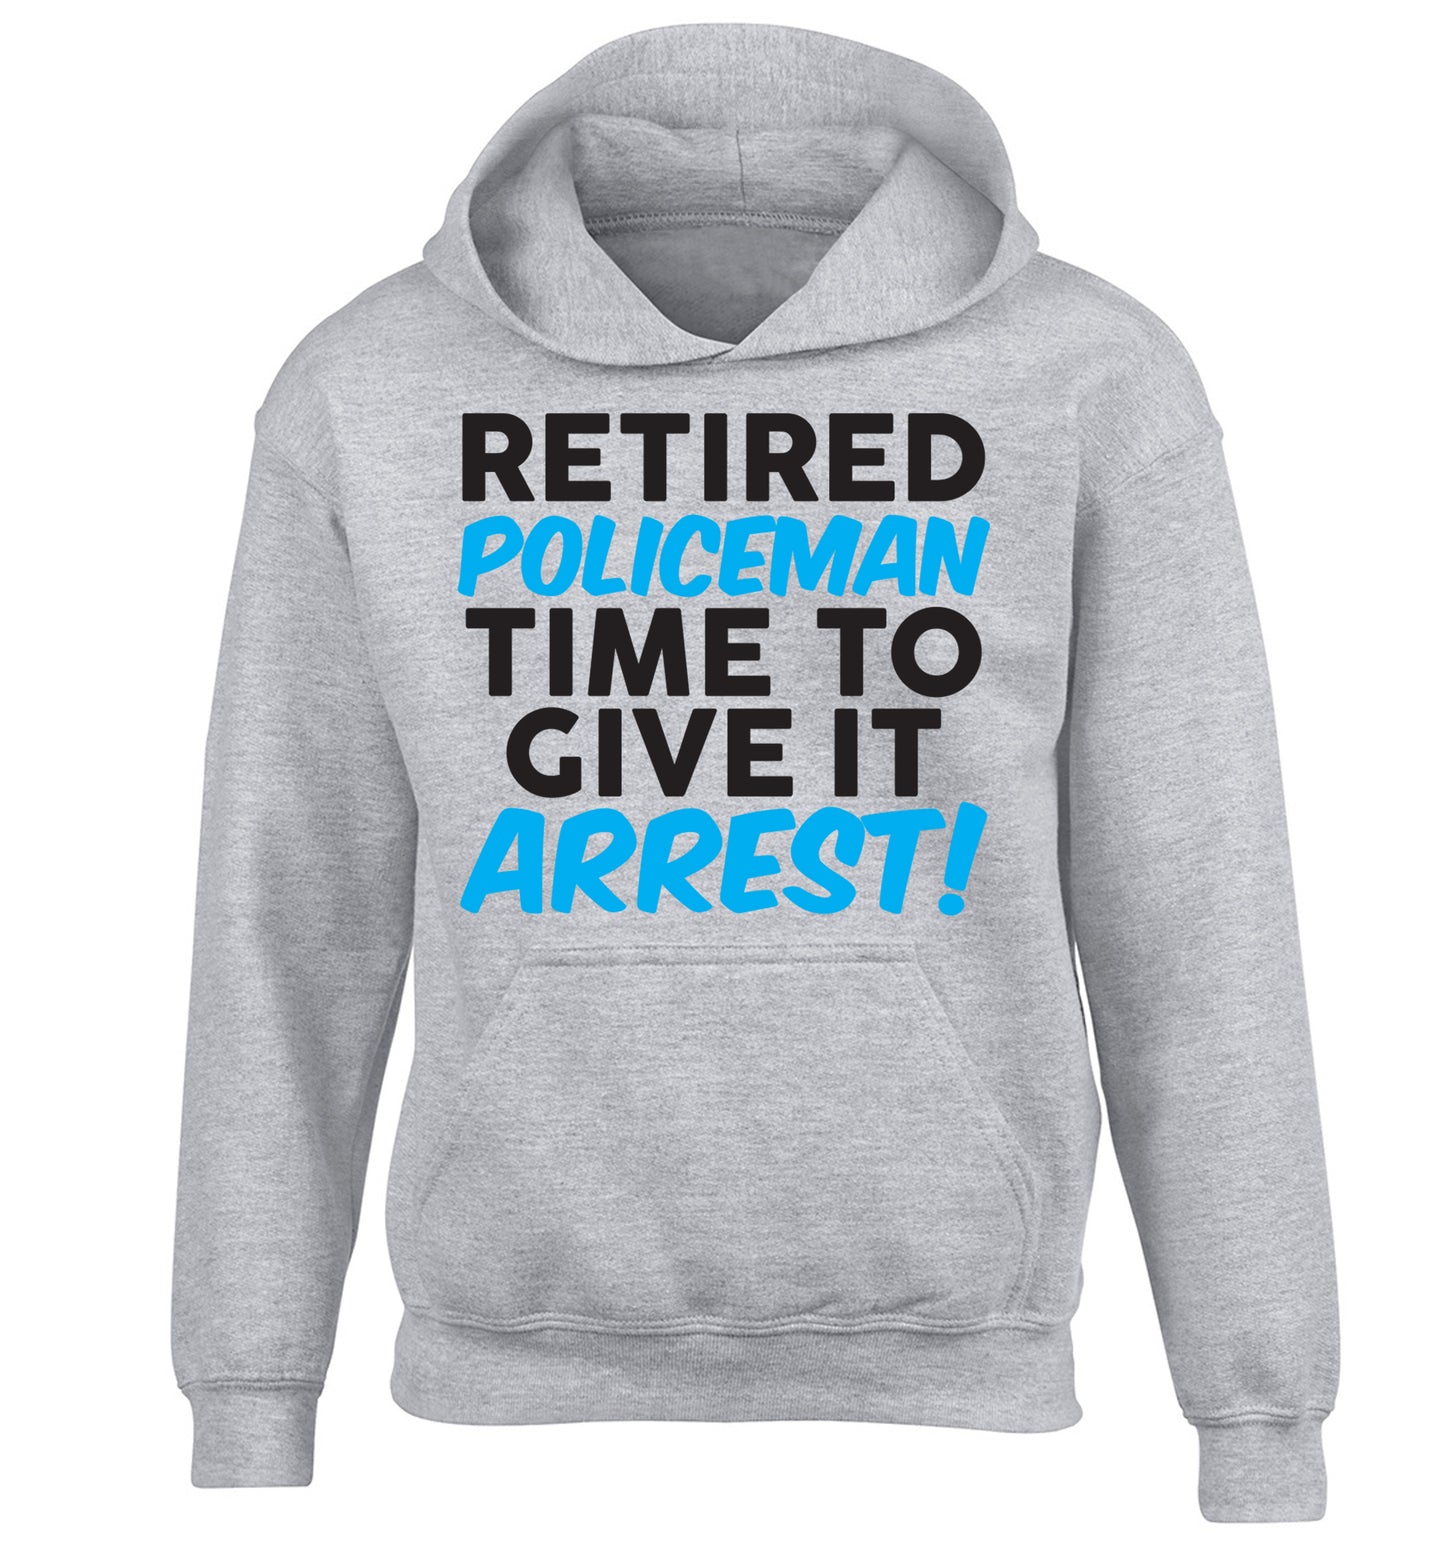 Retired policeman give it arresst! children's grey hoodie 12-13 Years